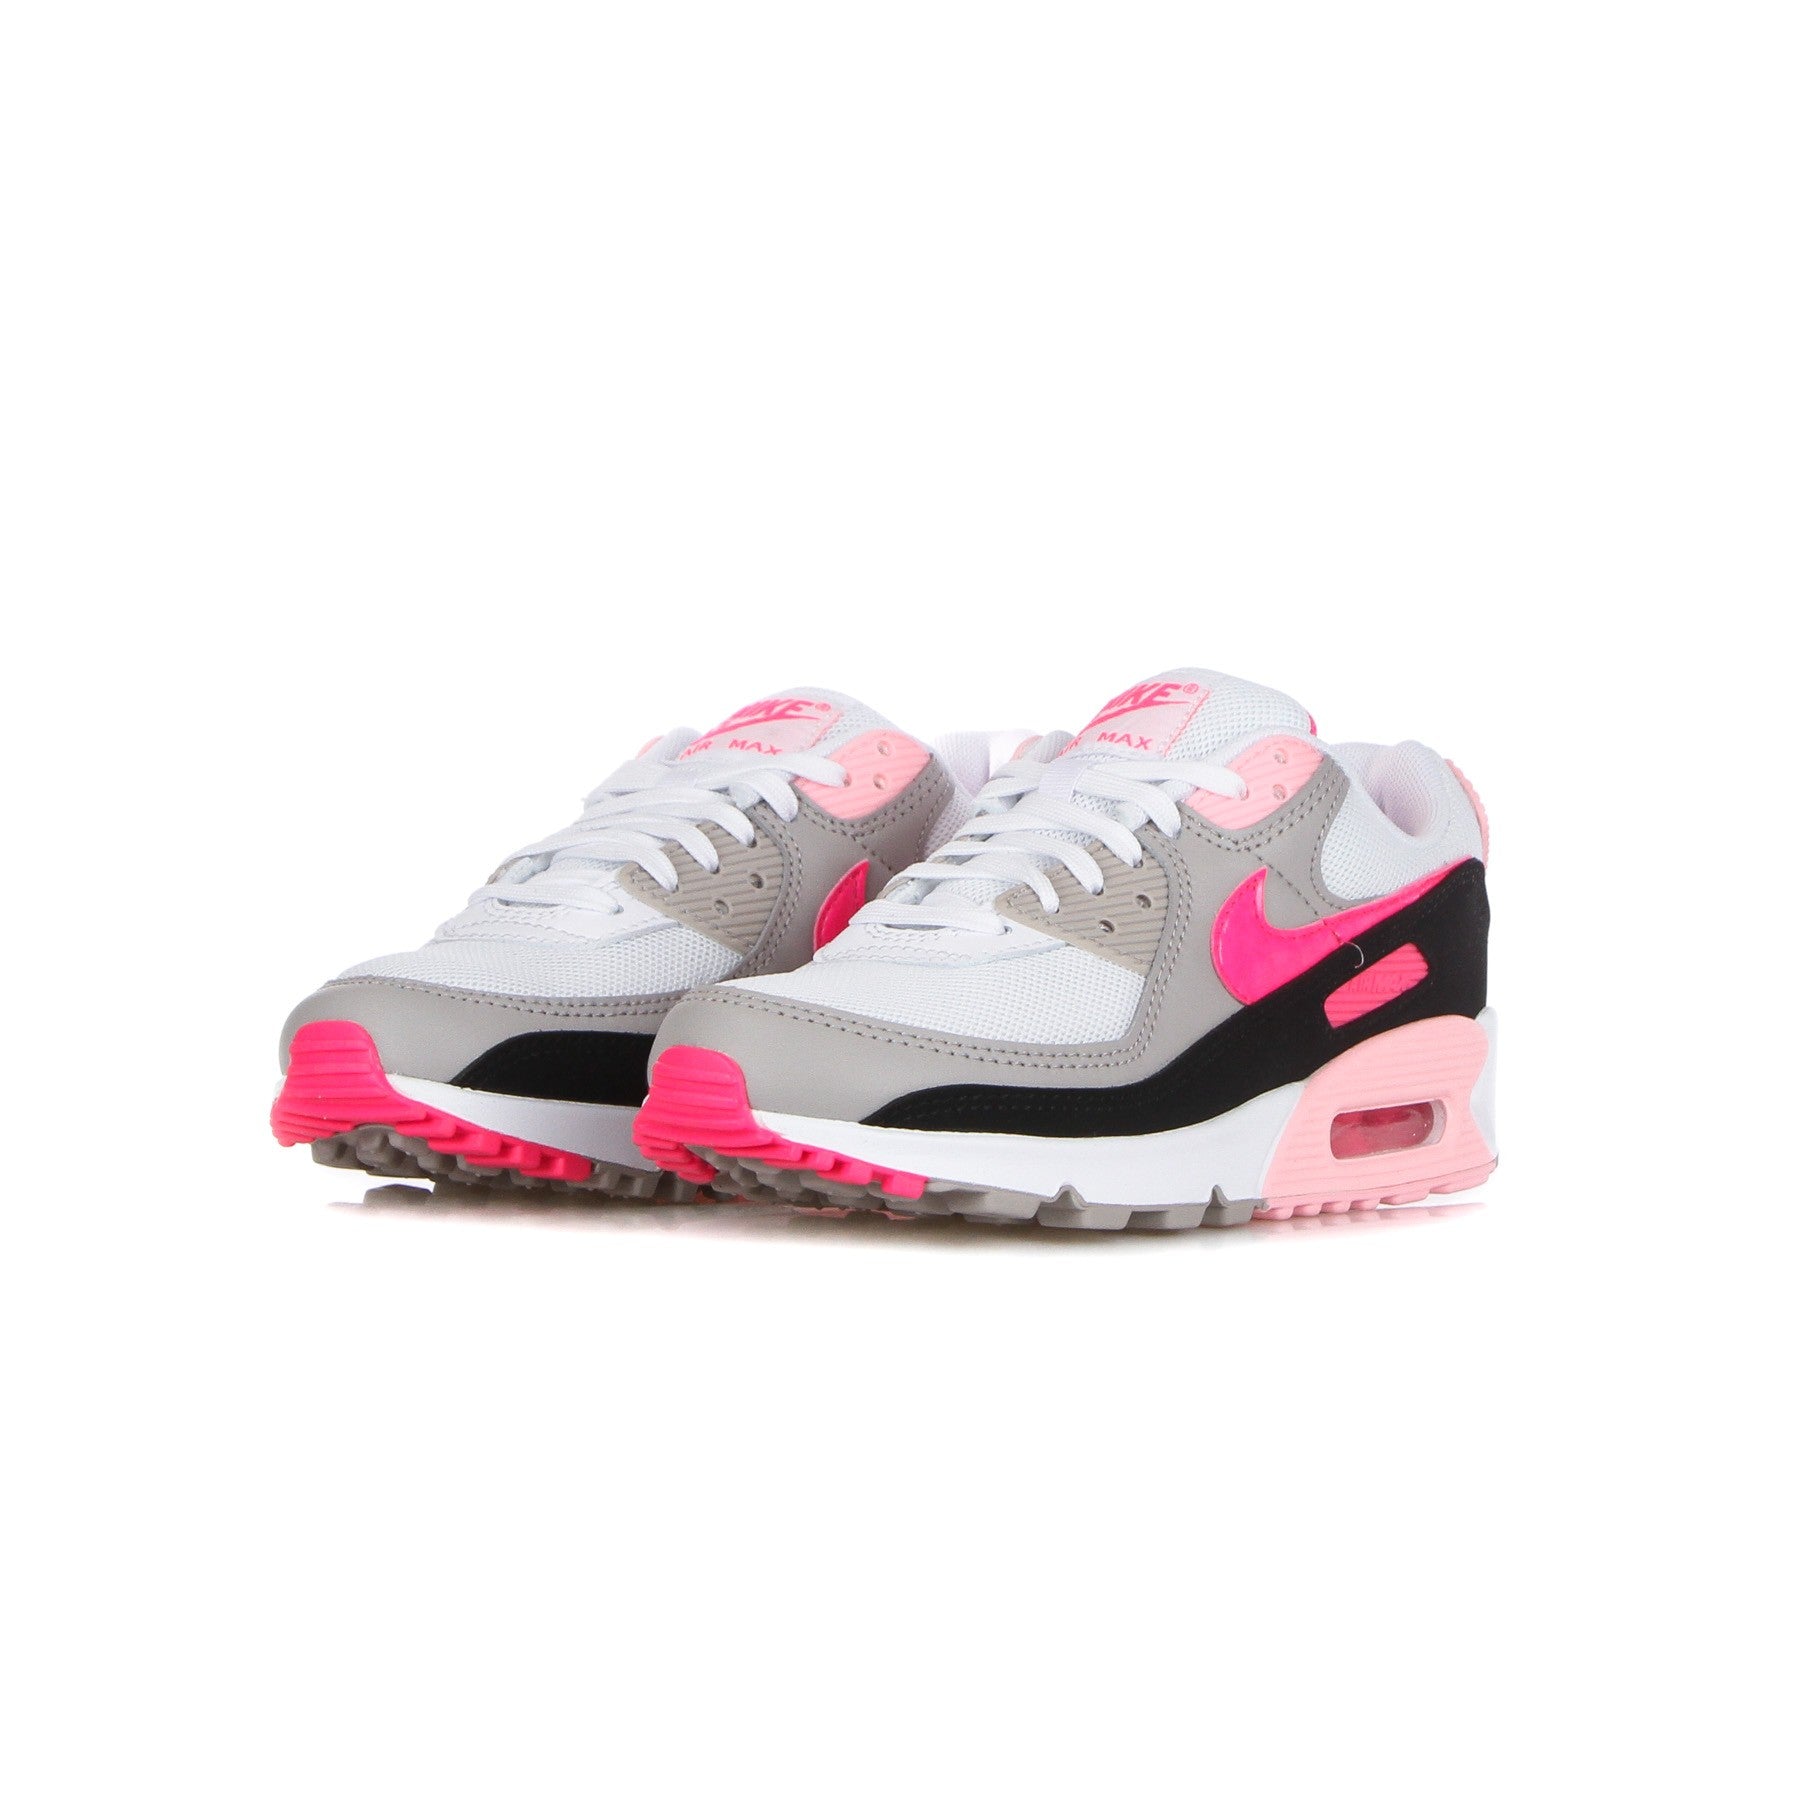 Wmns Air Max 90 White/hyper Pink/black/college Gray Women's Low Shoe